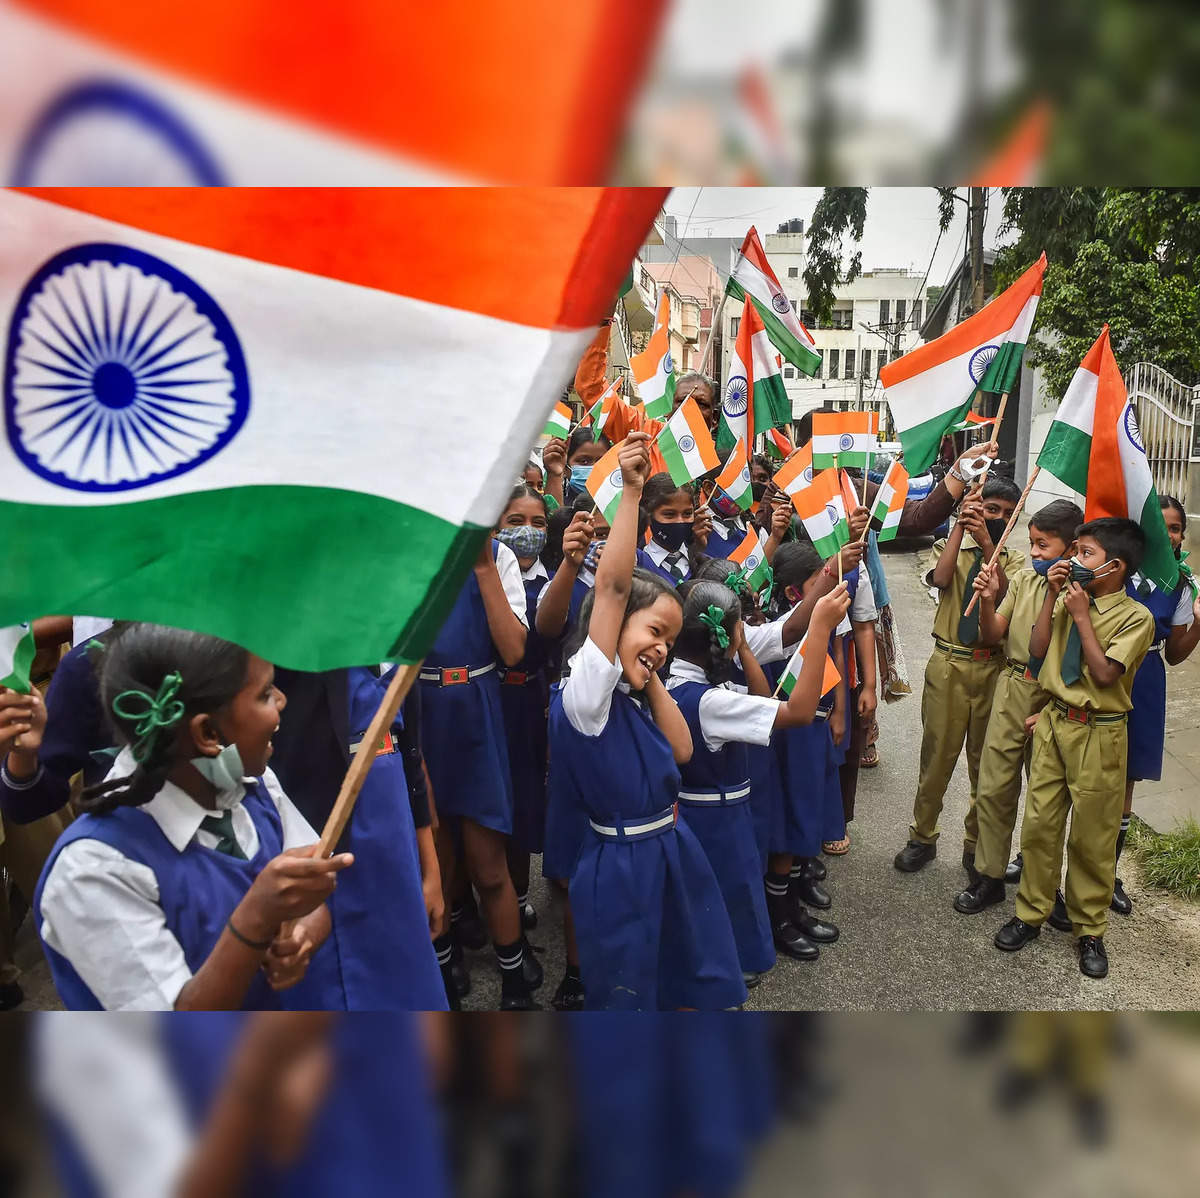 Priyanka Chopra trolled for disrespecting Indian flag, not wearing a sari  while doing it | Bollywood - Hindustan Times